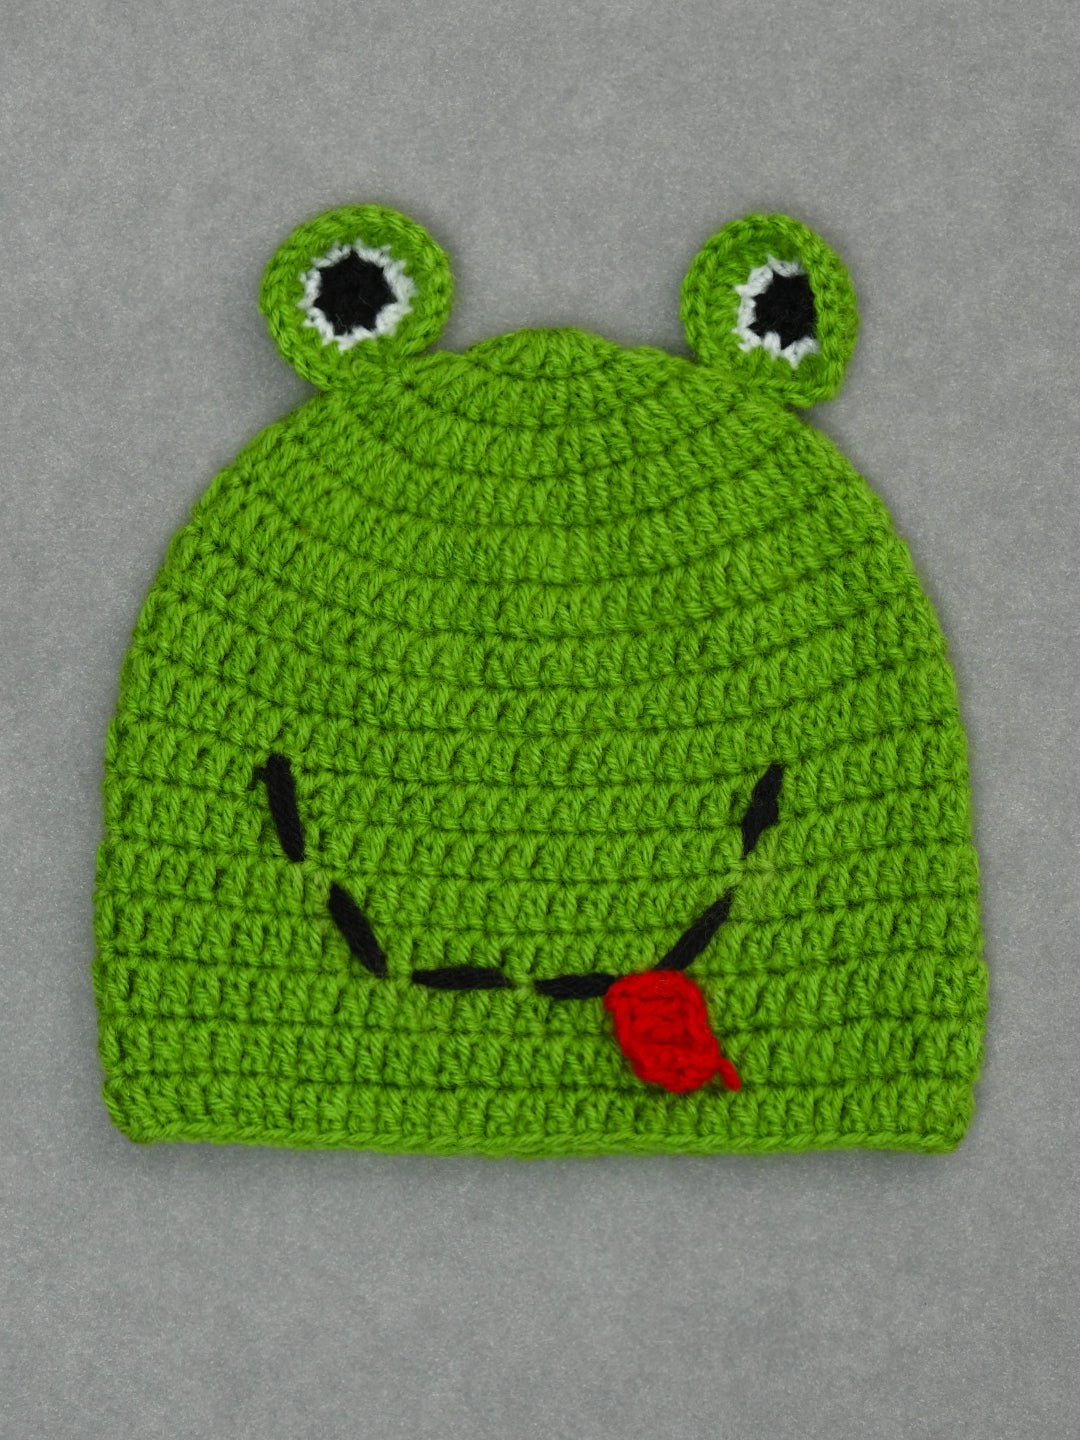 Funkrafts Handmade Soft Woolen Beanie Character Winter Warm Cap for Unisex Kids Pack of 2 White, Green